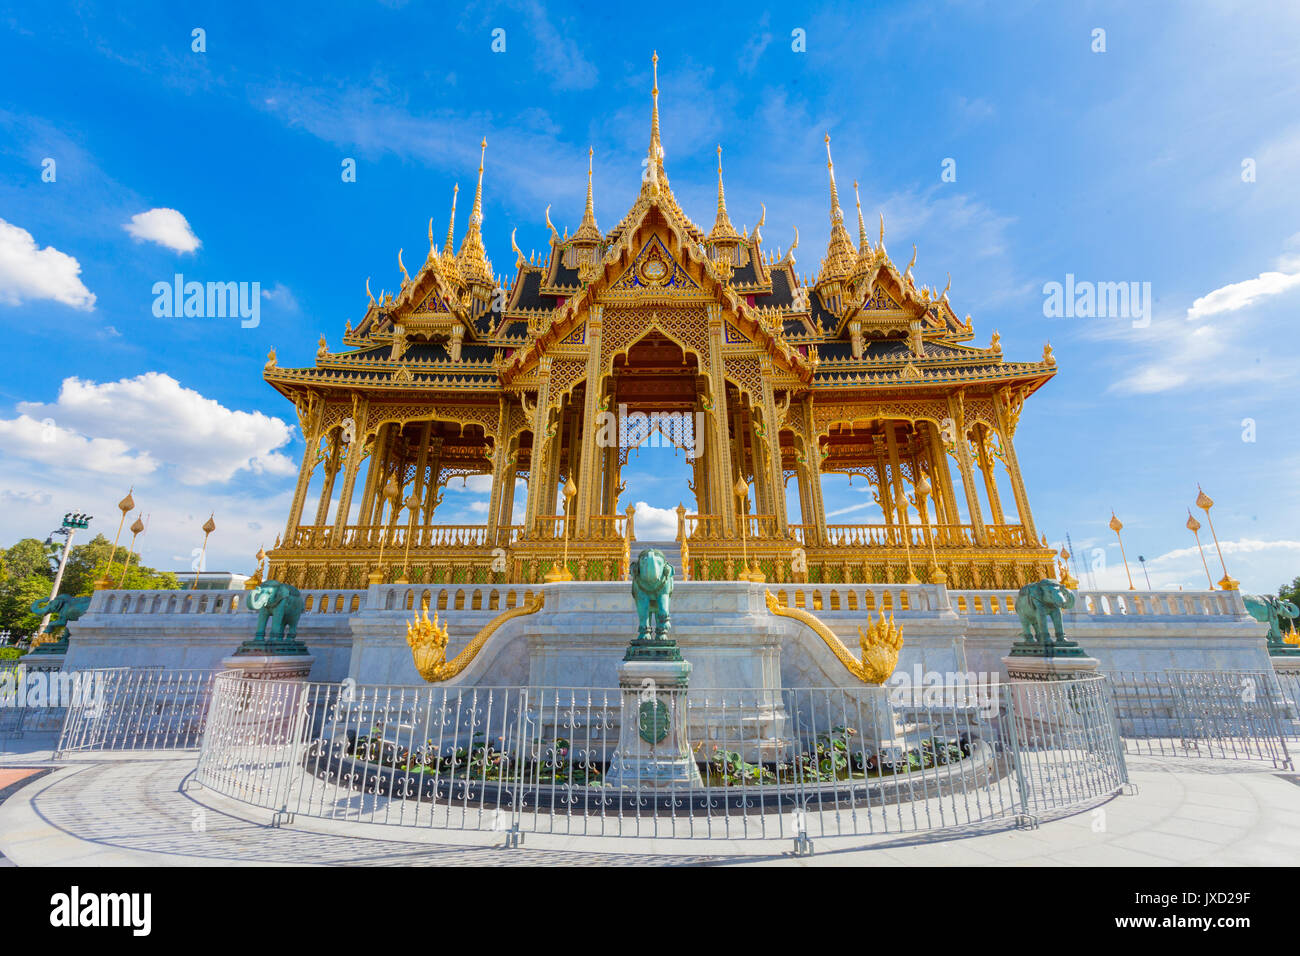 BANGKOK, THAILAND - August 13: The Ananta Samakhom Throne Hall, Thailand on August 13 2017. Built in Italian Renaissance and Neo Classic style,Ananta  Stock Photo